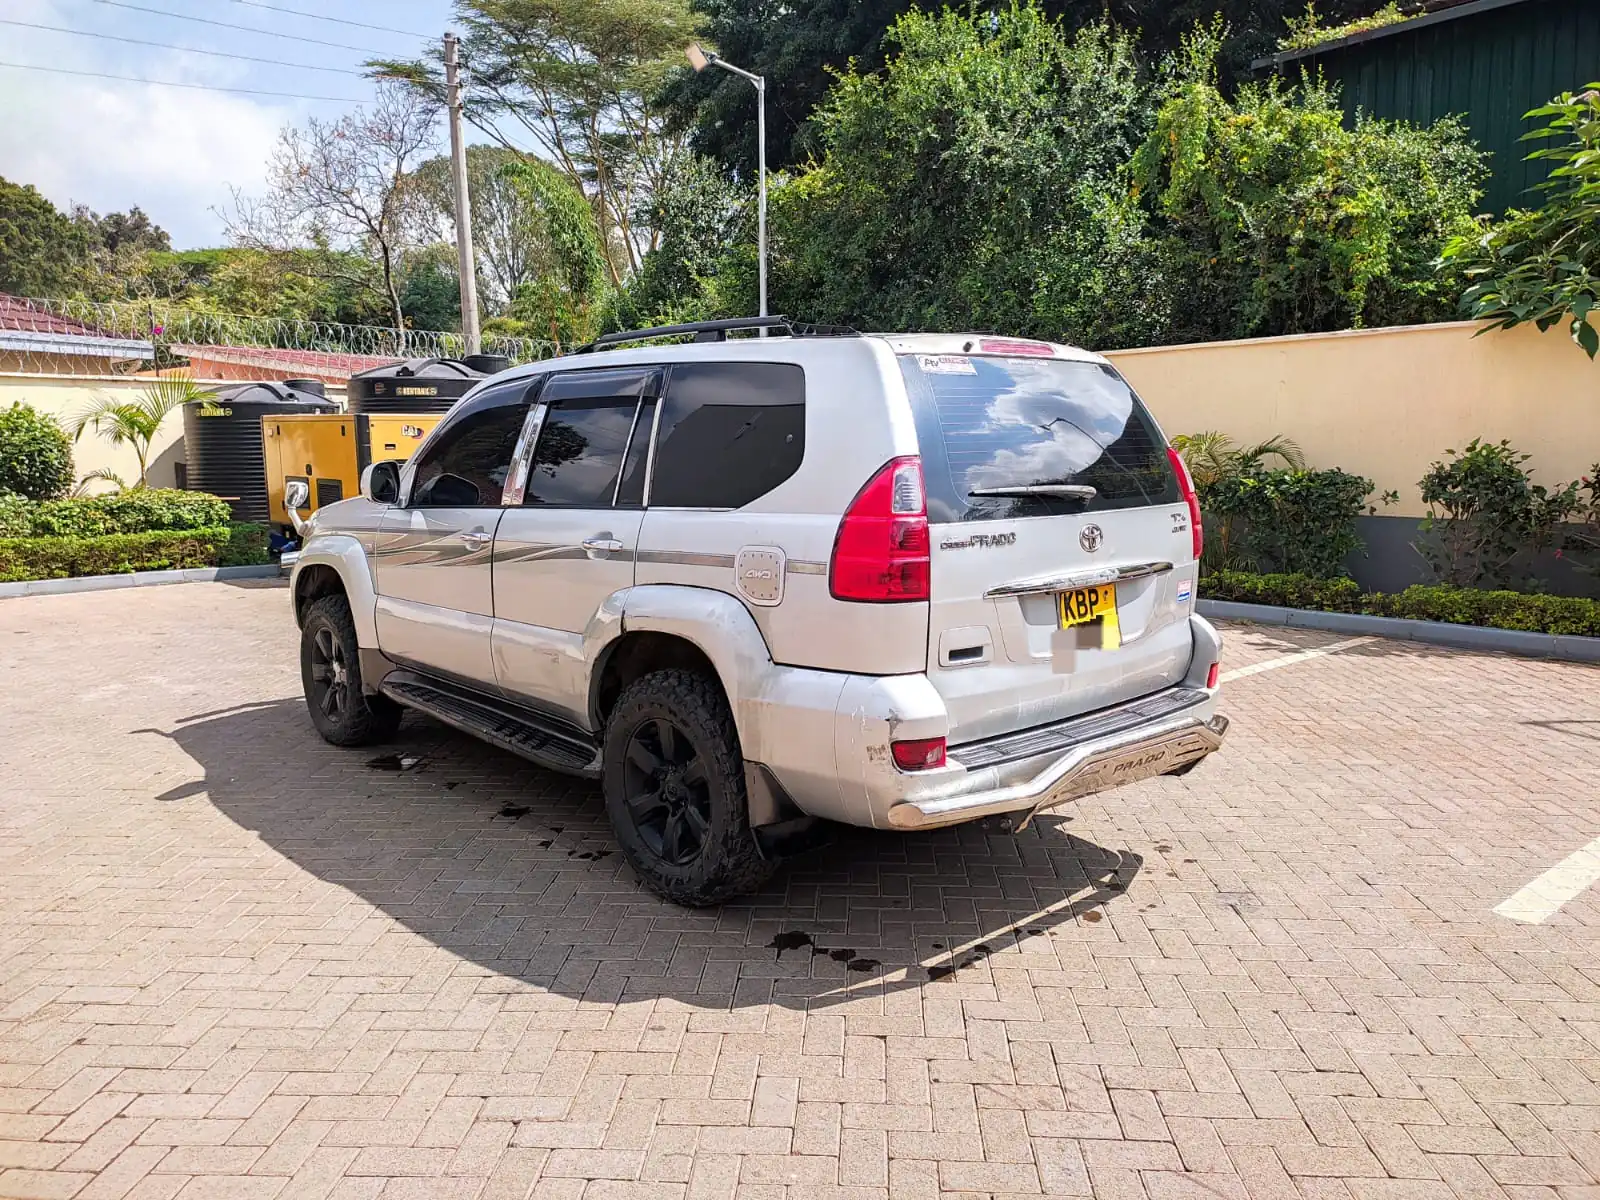 Toyota Prado J120 Kenya 🔥 You Pay 40% Deposit Trade in OK EXCLUSIVE Toyota Prado j120 for sale in kenya hire purchase installments clean